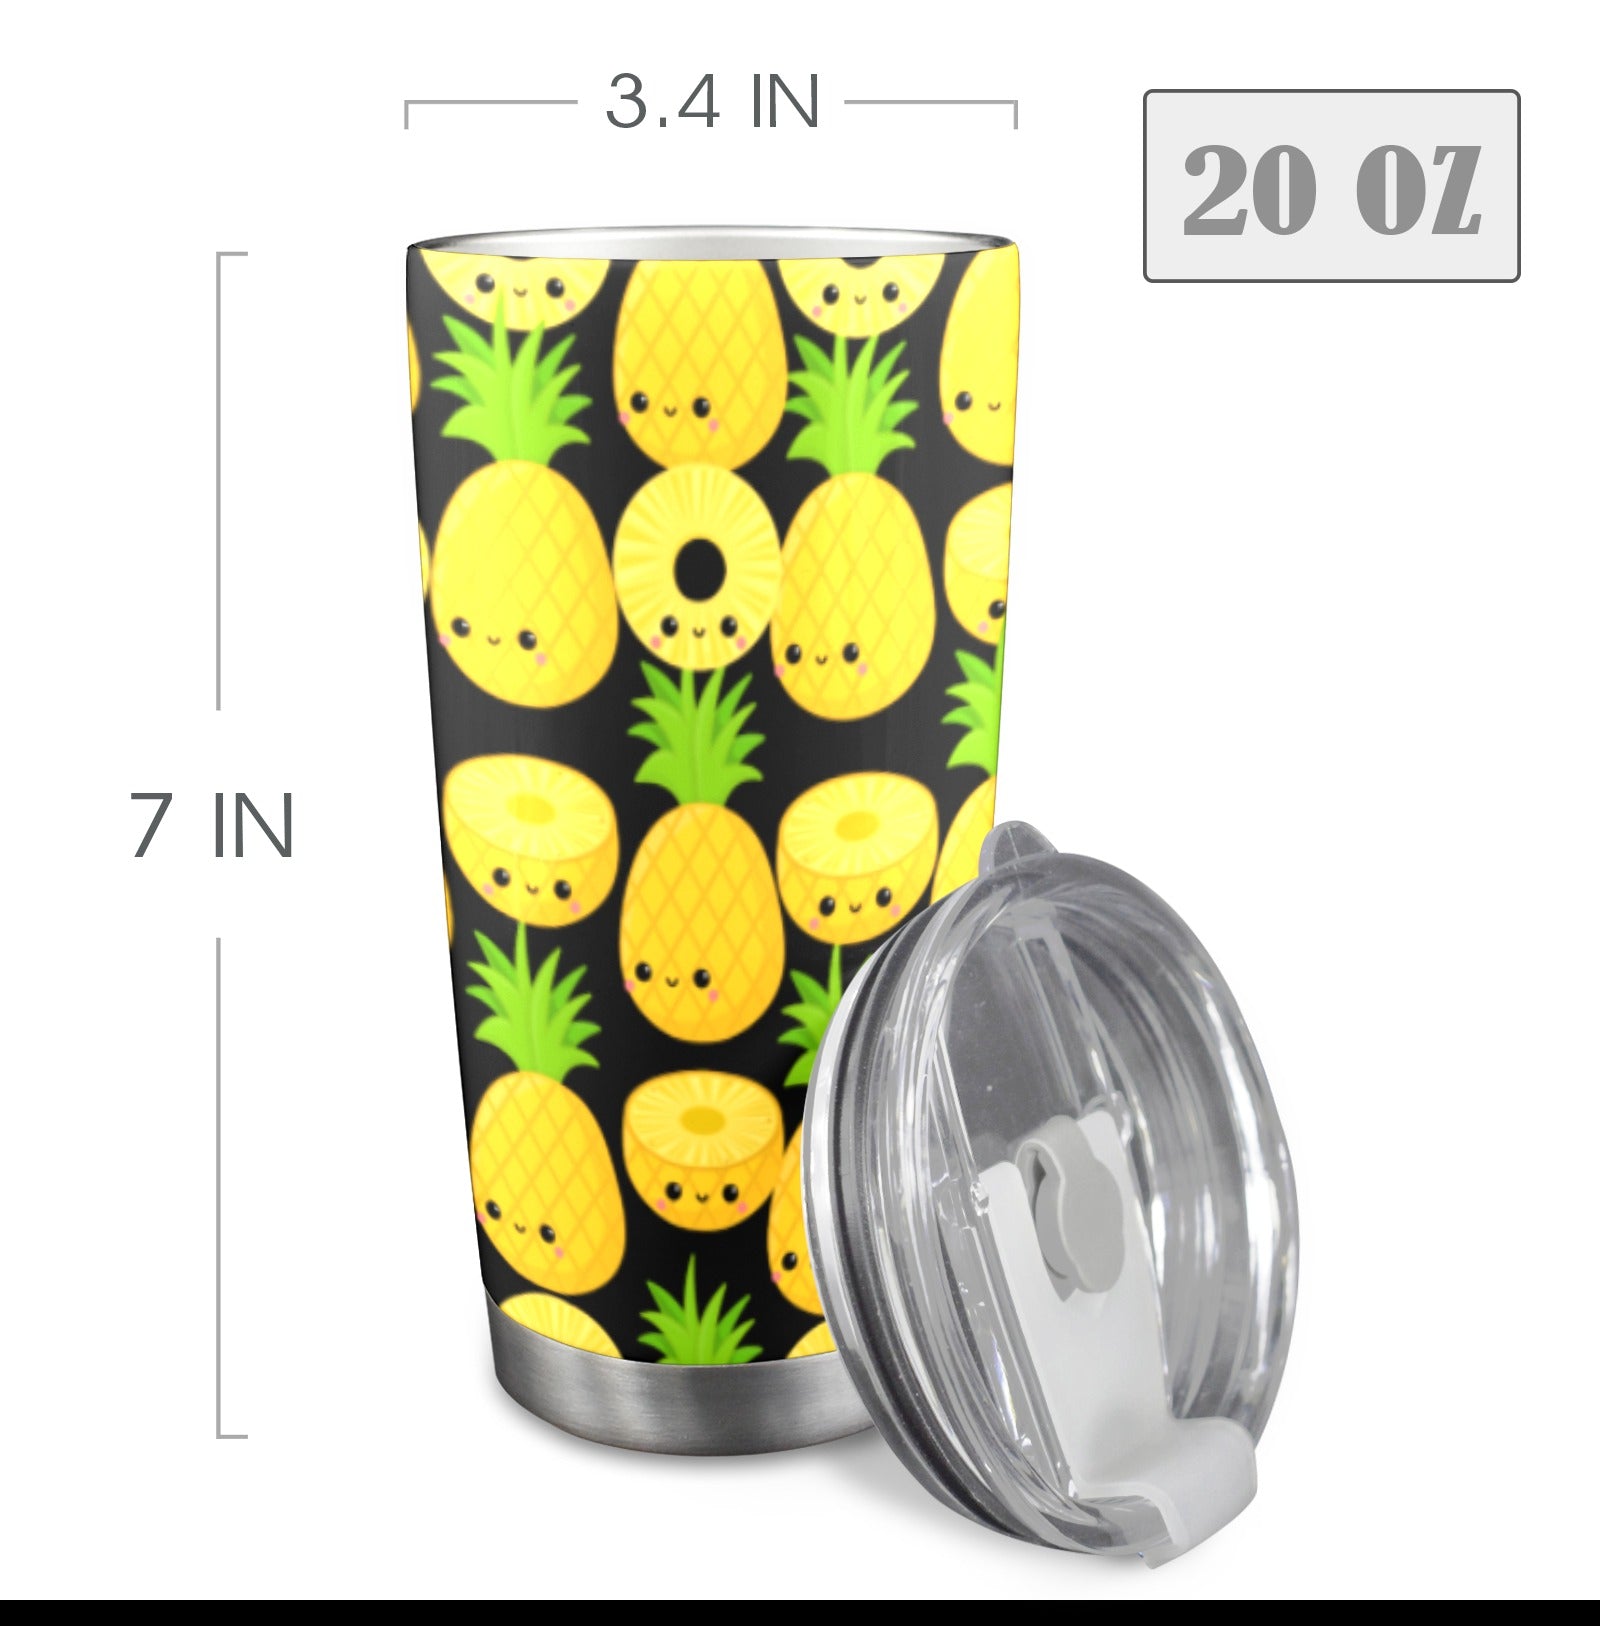 Happy Pineapples - 20oz Travel Mug with Clear Lid Clear Lid Travel Mug Food